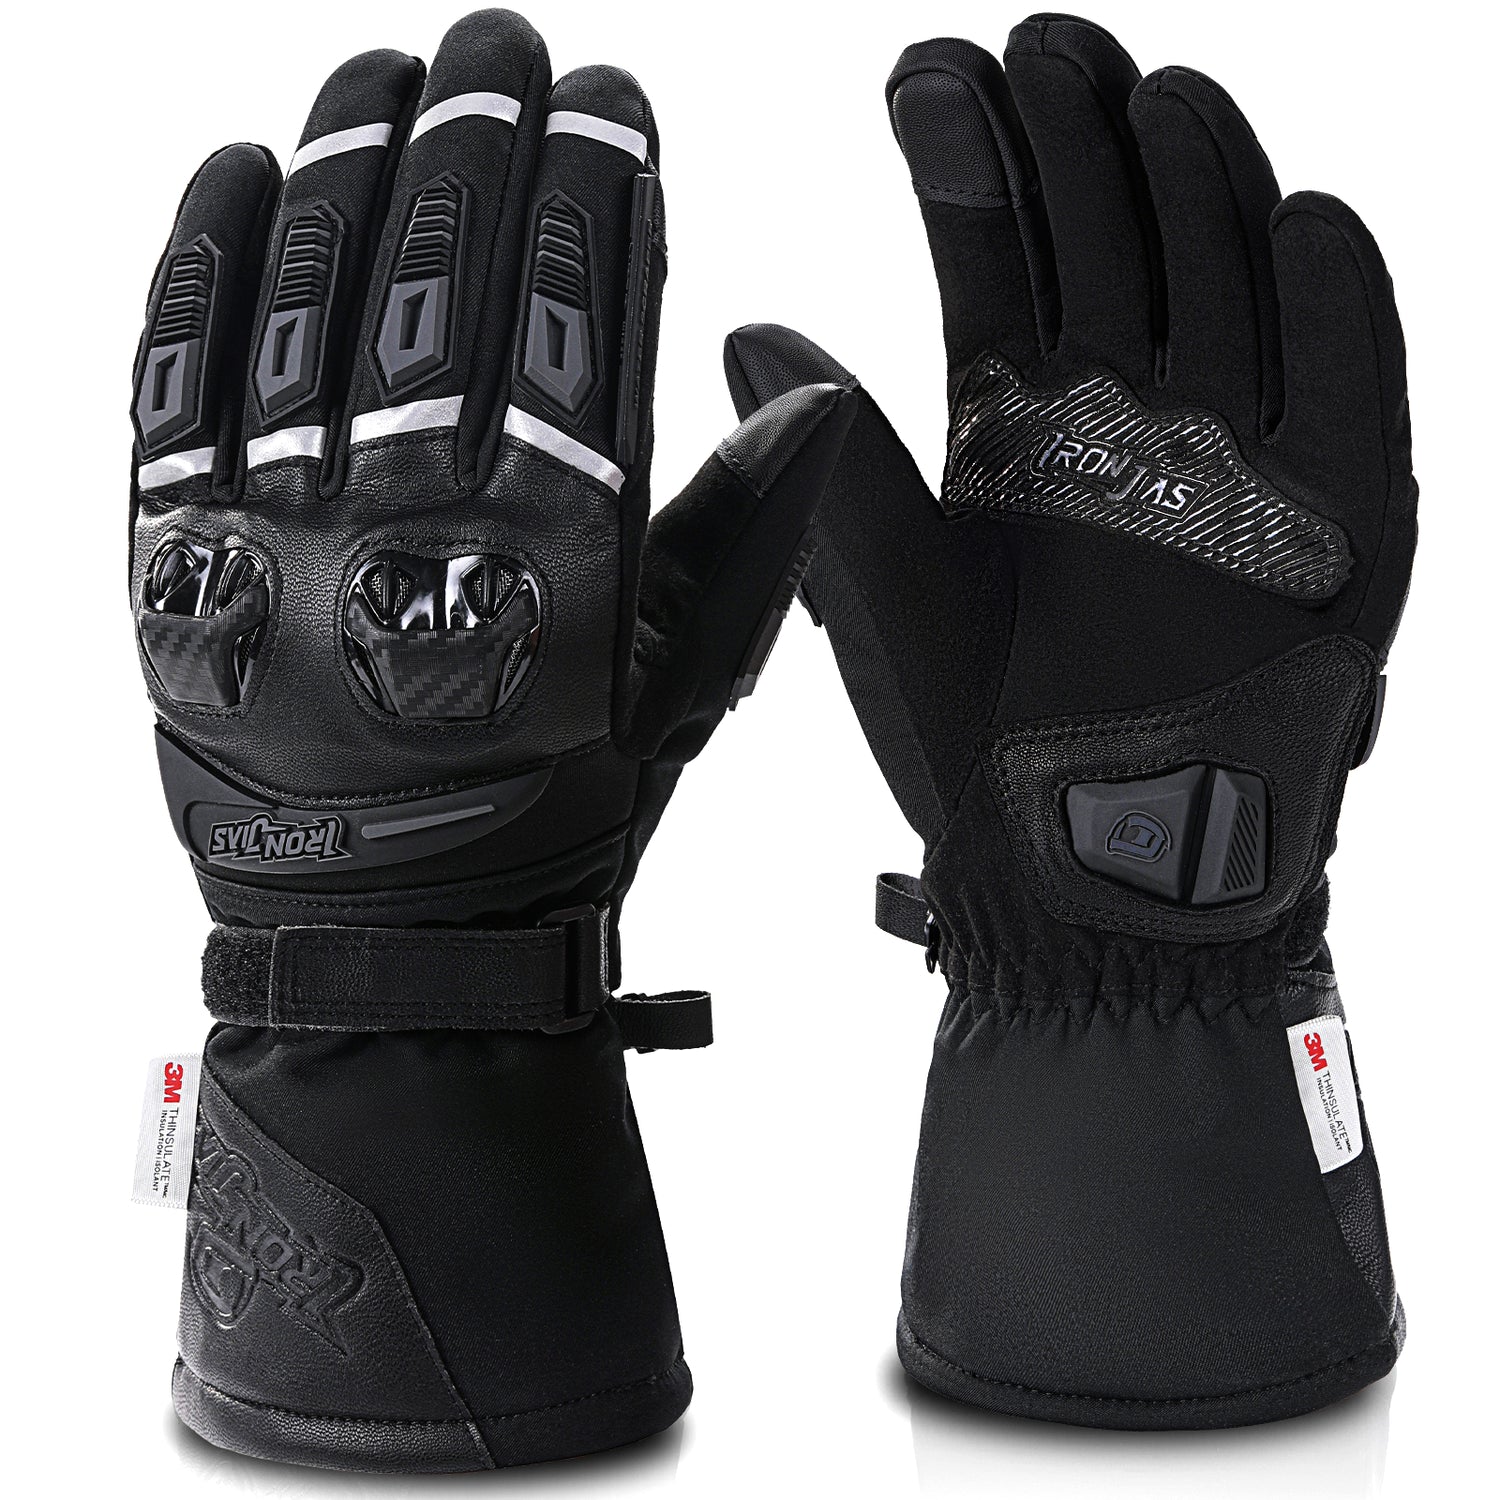 Black WarmShield Pro Motorcycle Gloves